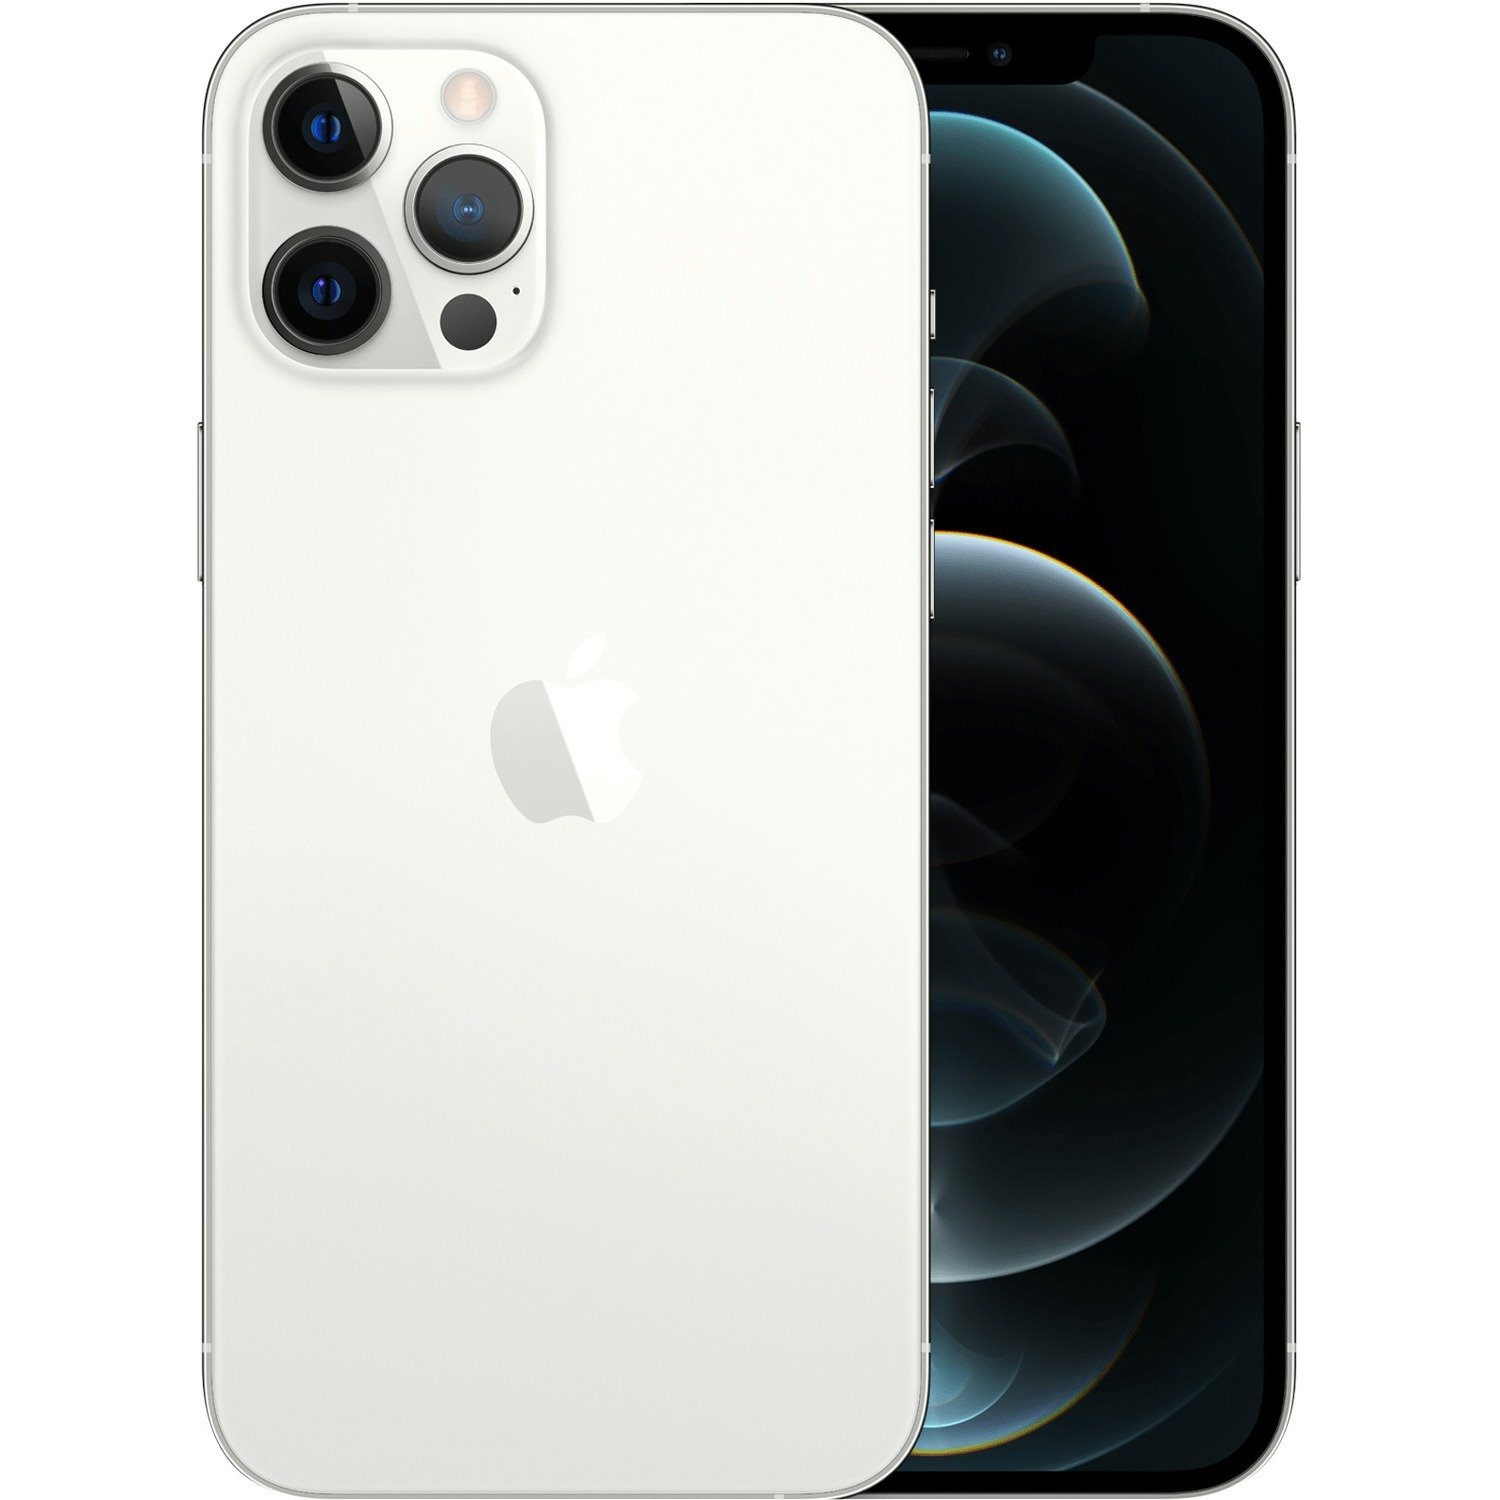 Apple iPhone 12 Pro A2341 128 GB Smartphone - 6.1" OLED 2532 x 1170 - Hexa-core (6 Core) - 6 GB RAM - iOS 14 - 5G - Silver